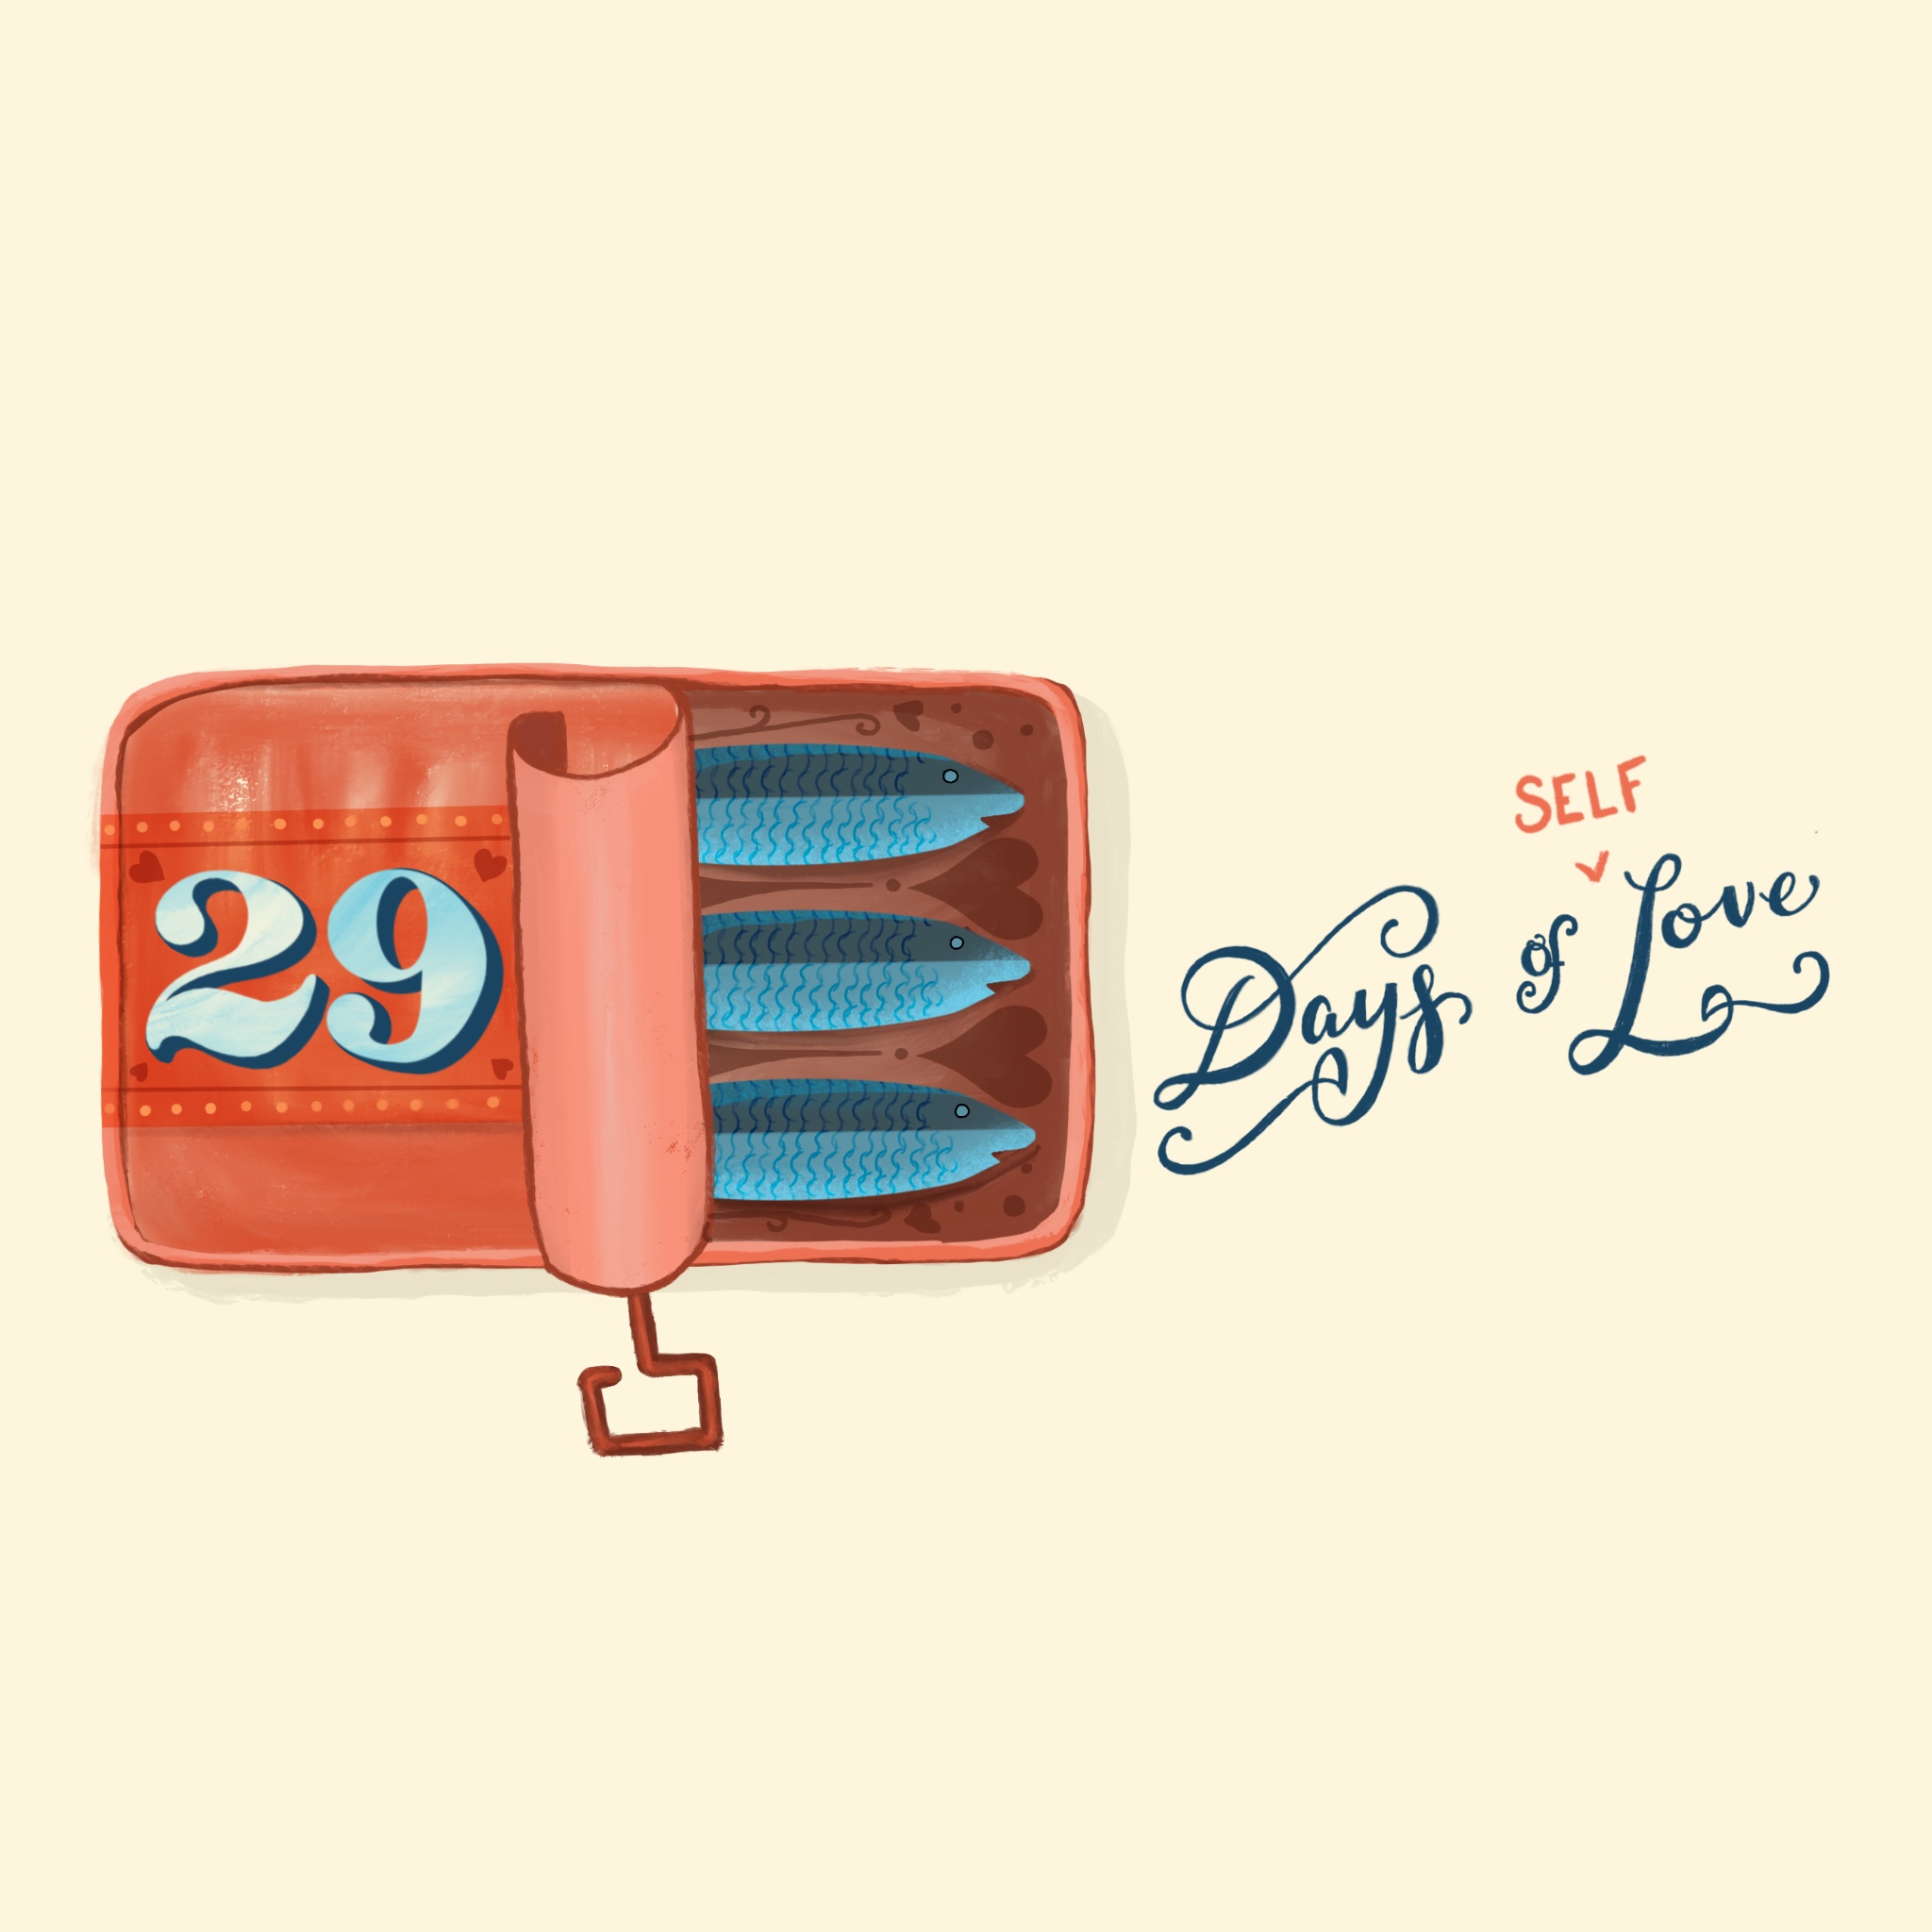 29 days of love, vulnerable, kristine palmer, artist, hand lettering, graphic design, illustration